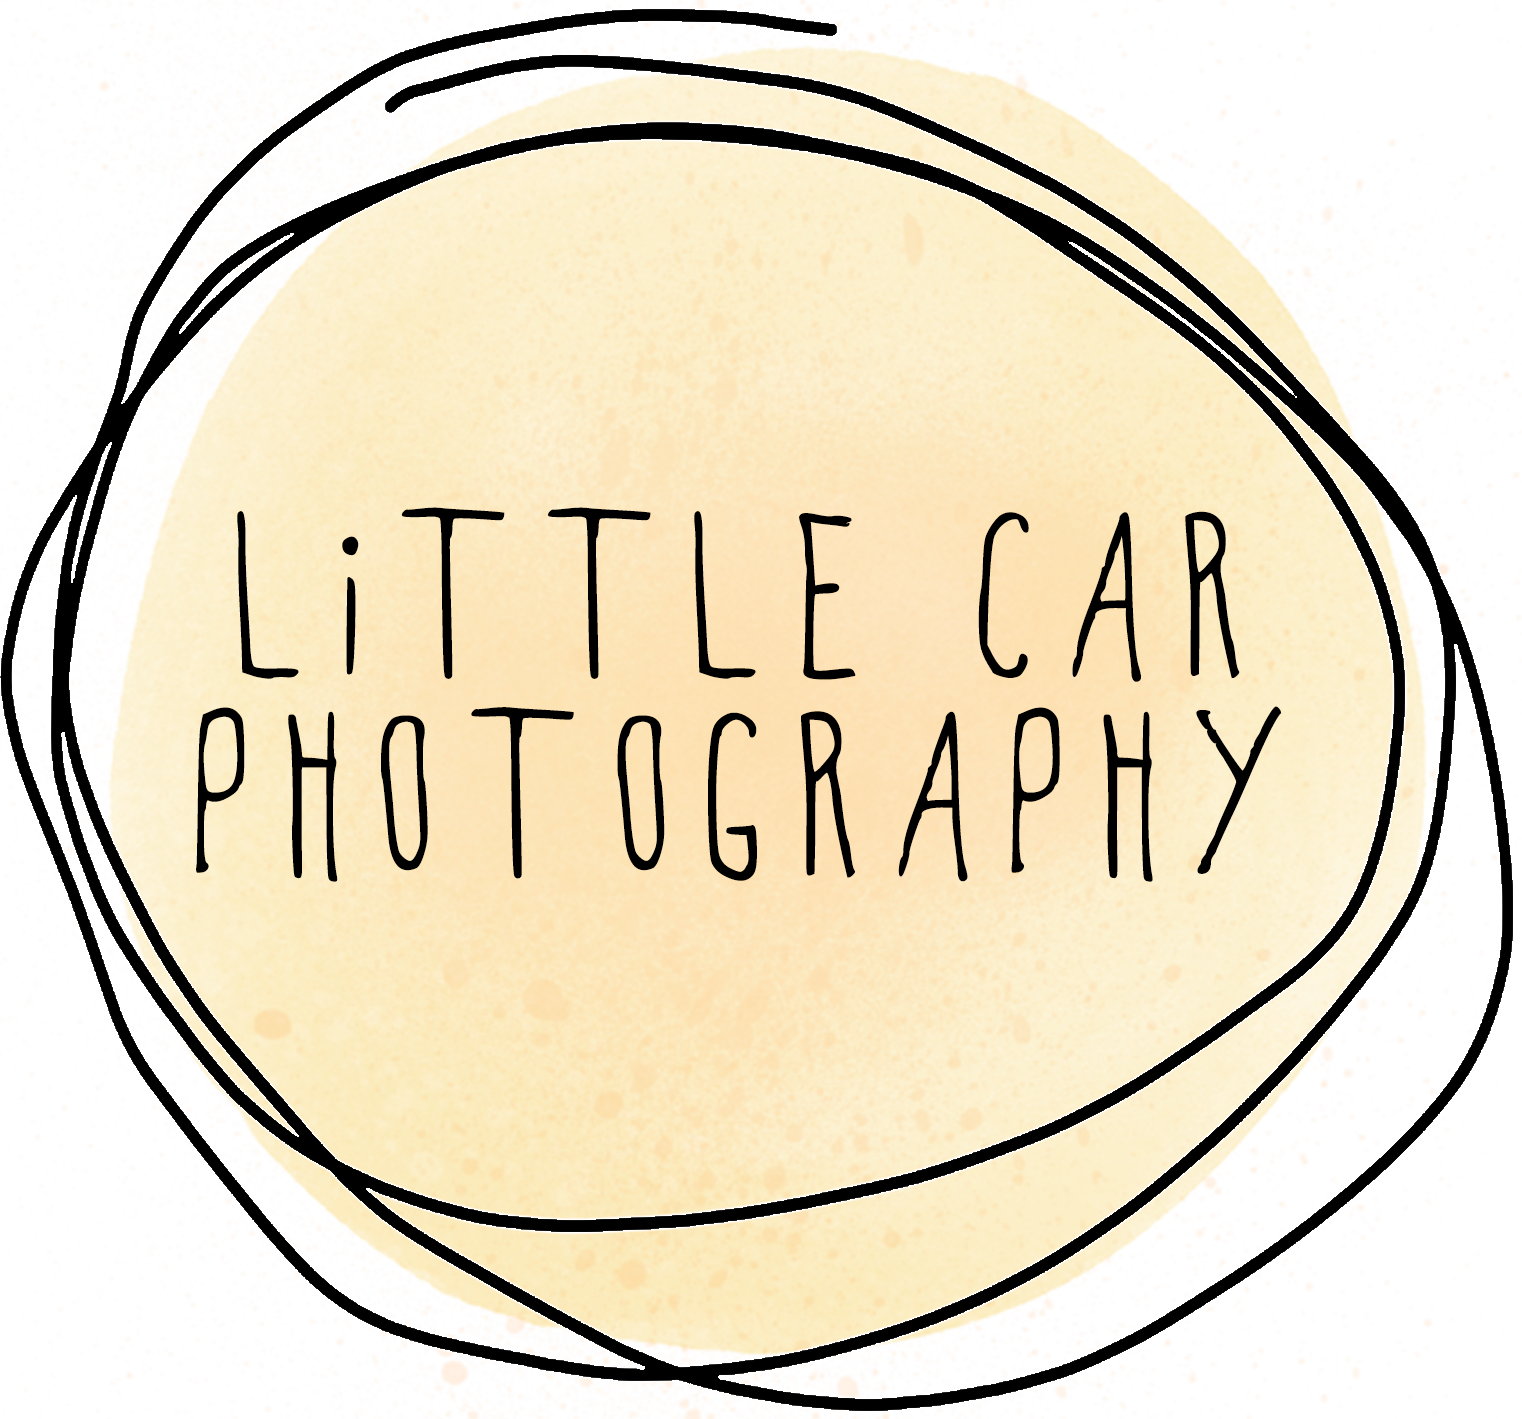 Little Car Photography